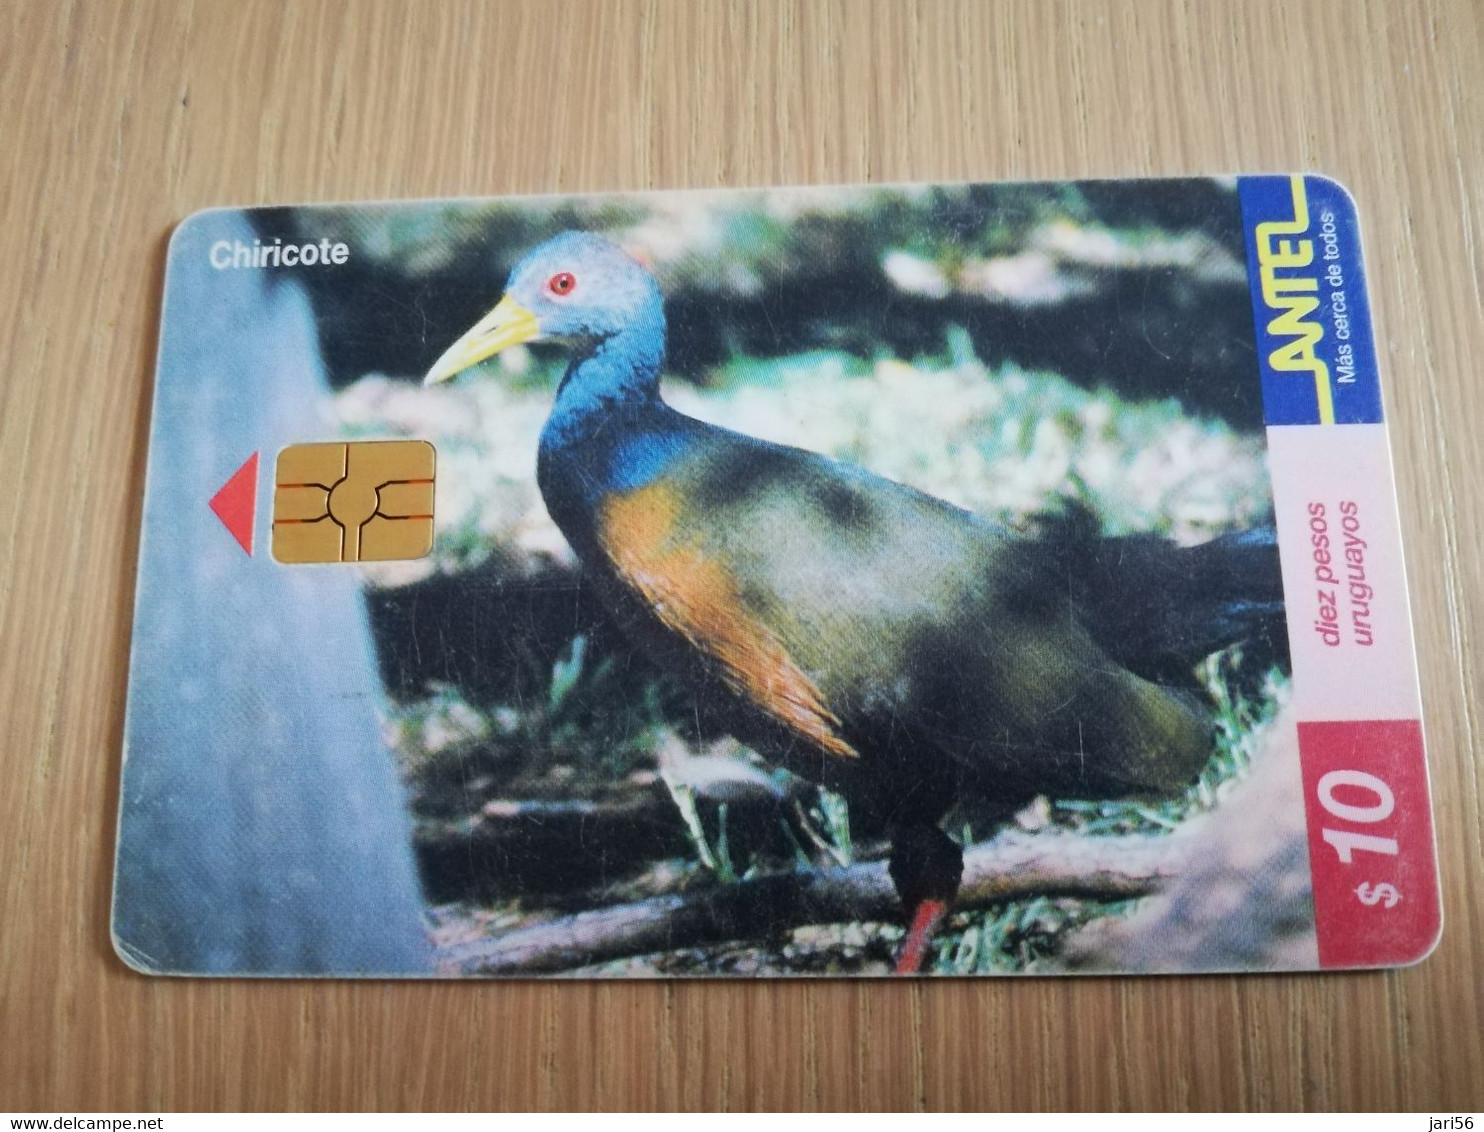 URUGUAY CHIPCARD  BIRD /VOGEL  $10 CHIRICOTE          Nice Used Card    **4515** - Uruguay